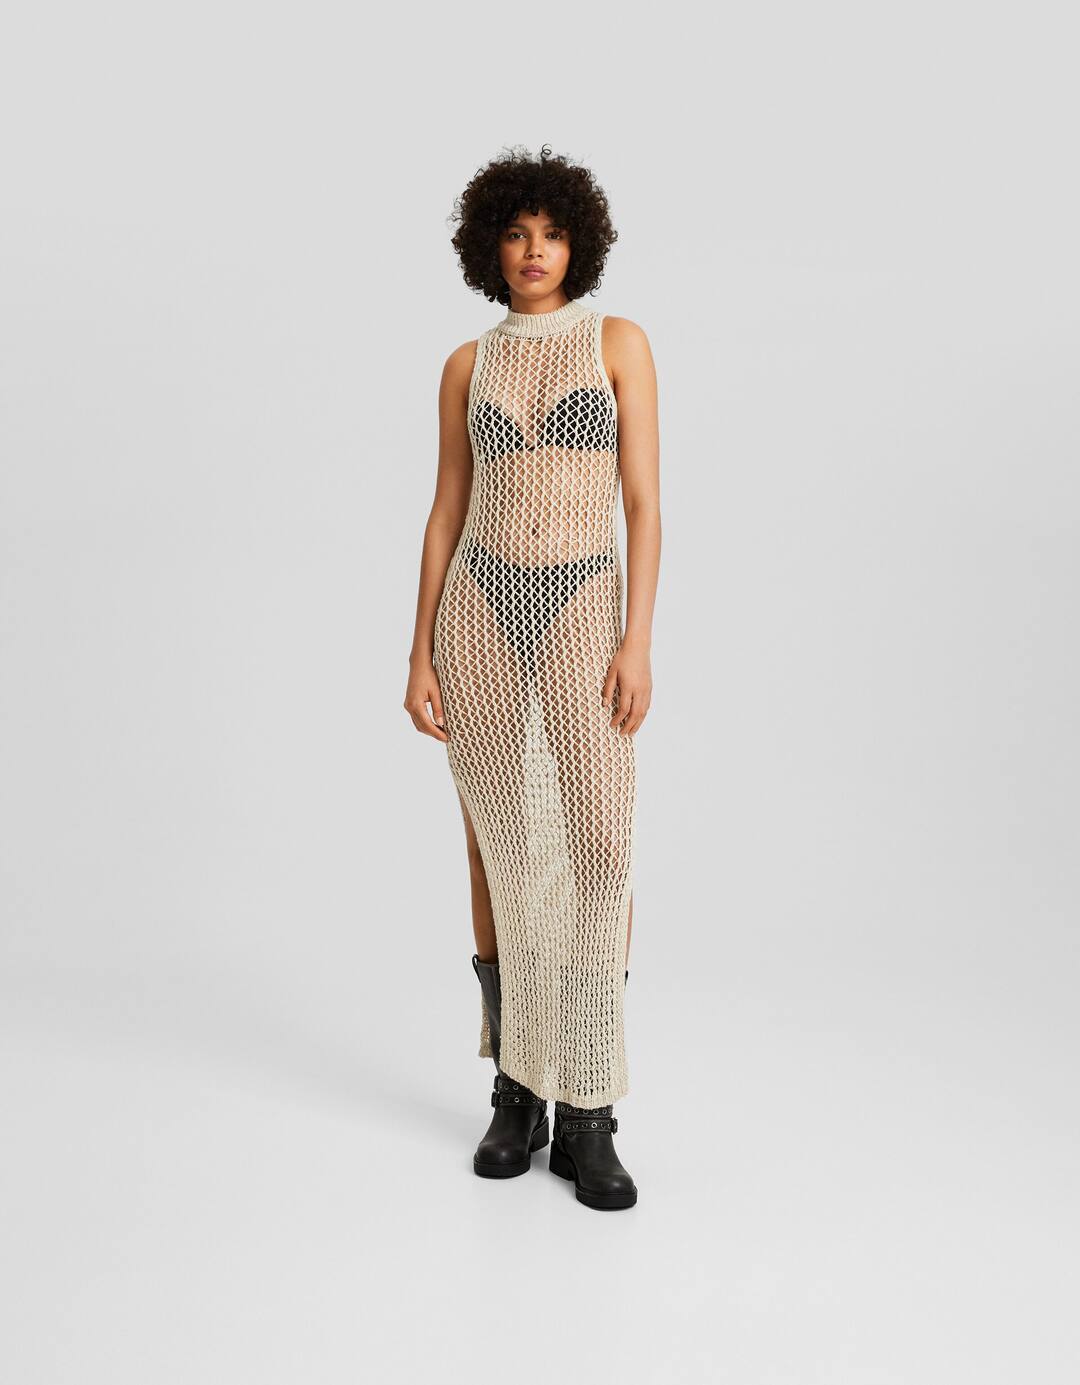 Long sleeveless mesh knit dress